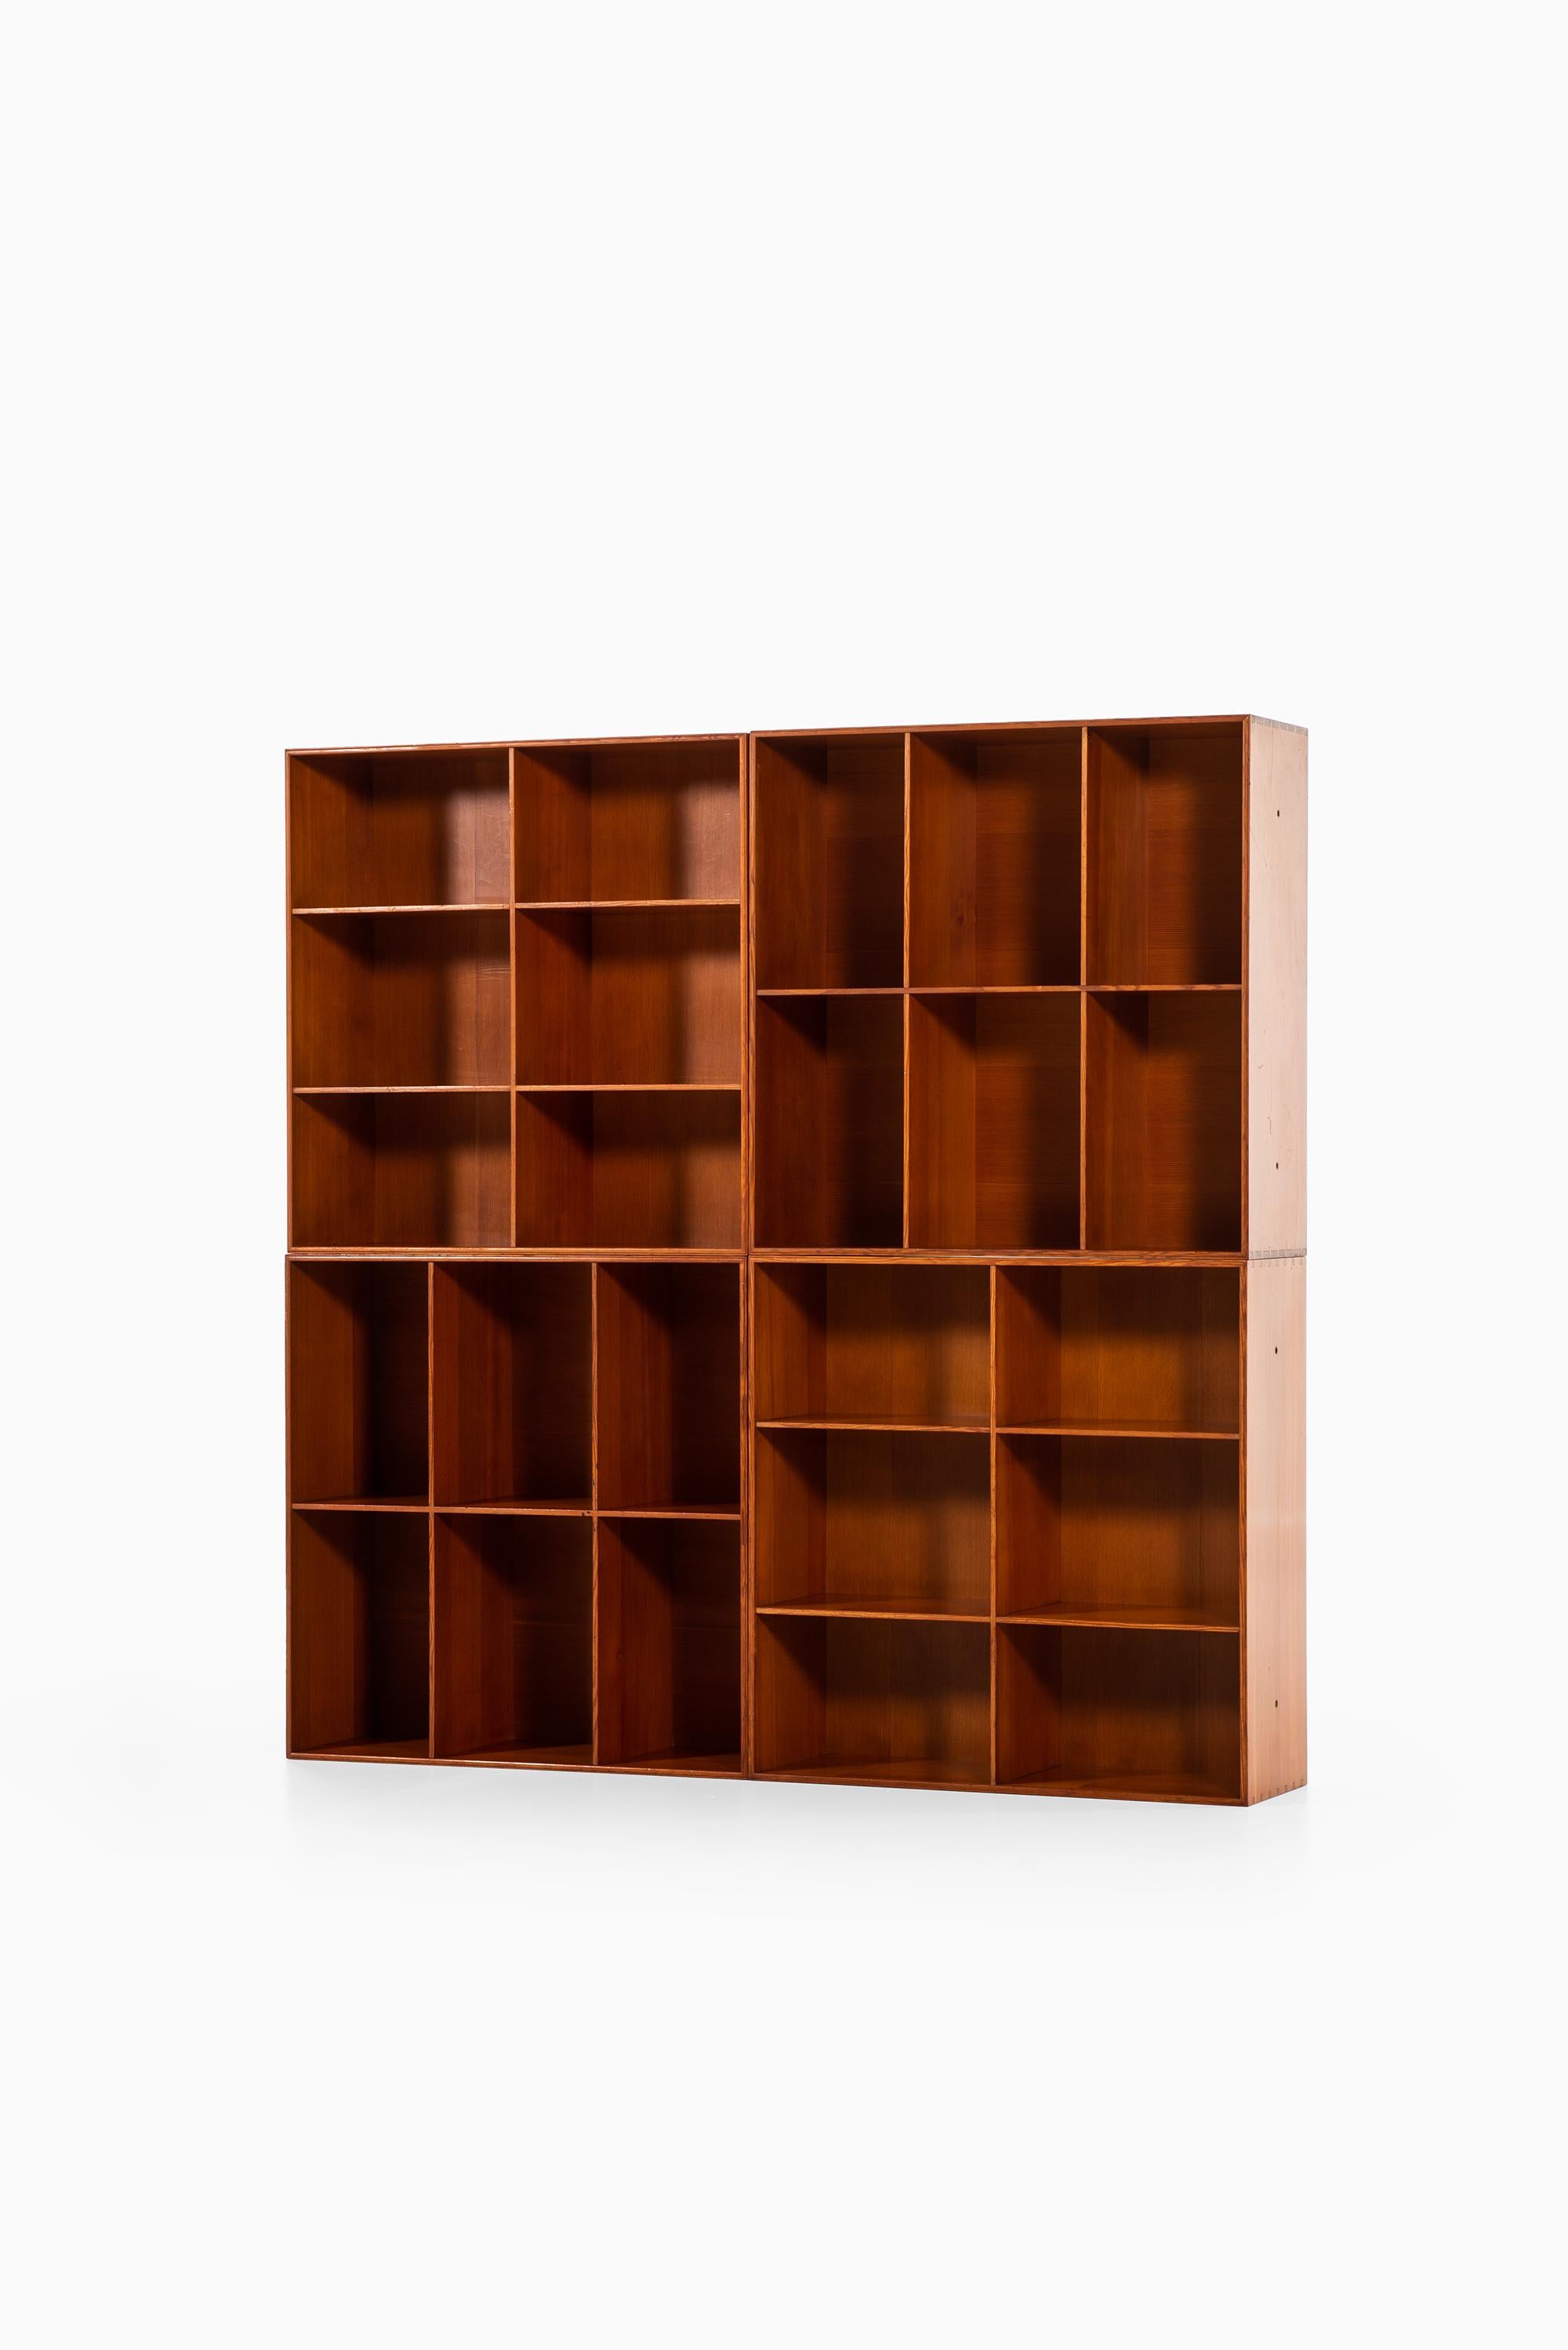 Set of 4 bookcases designed by Mogens Koch. Produced by Rud Rasmussen in Denmark.